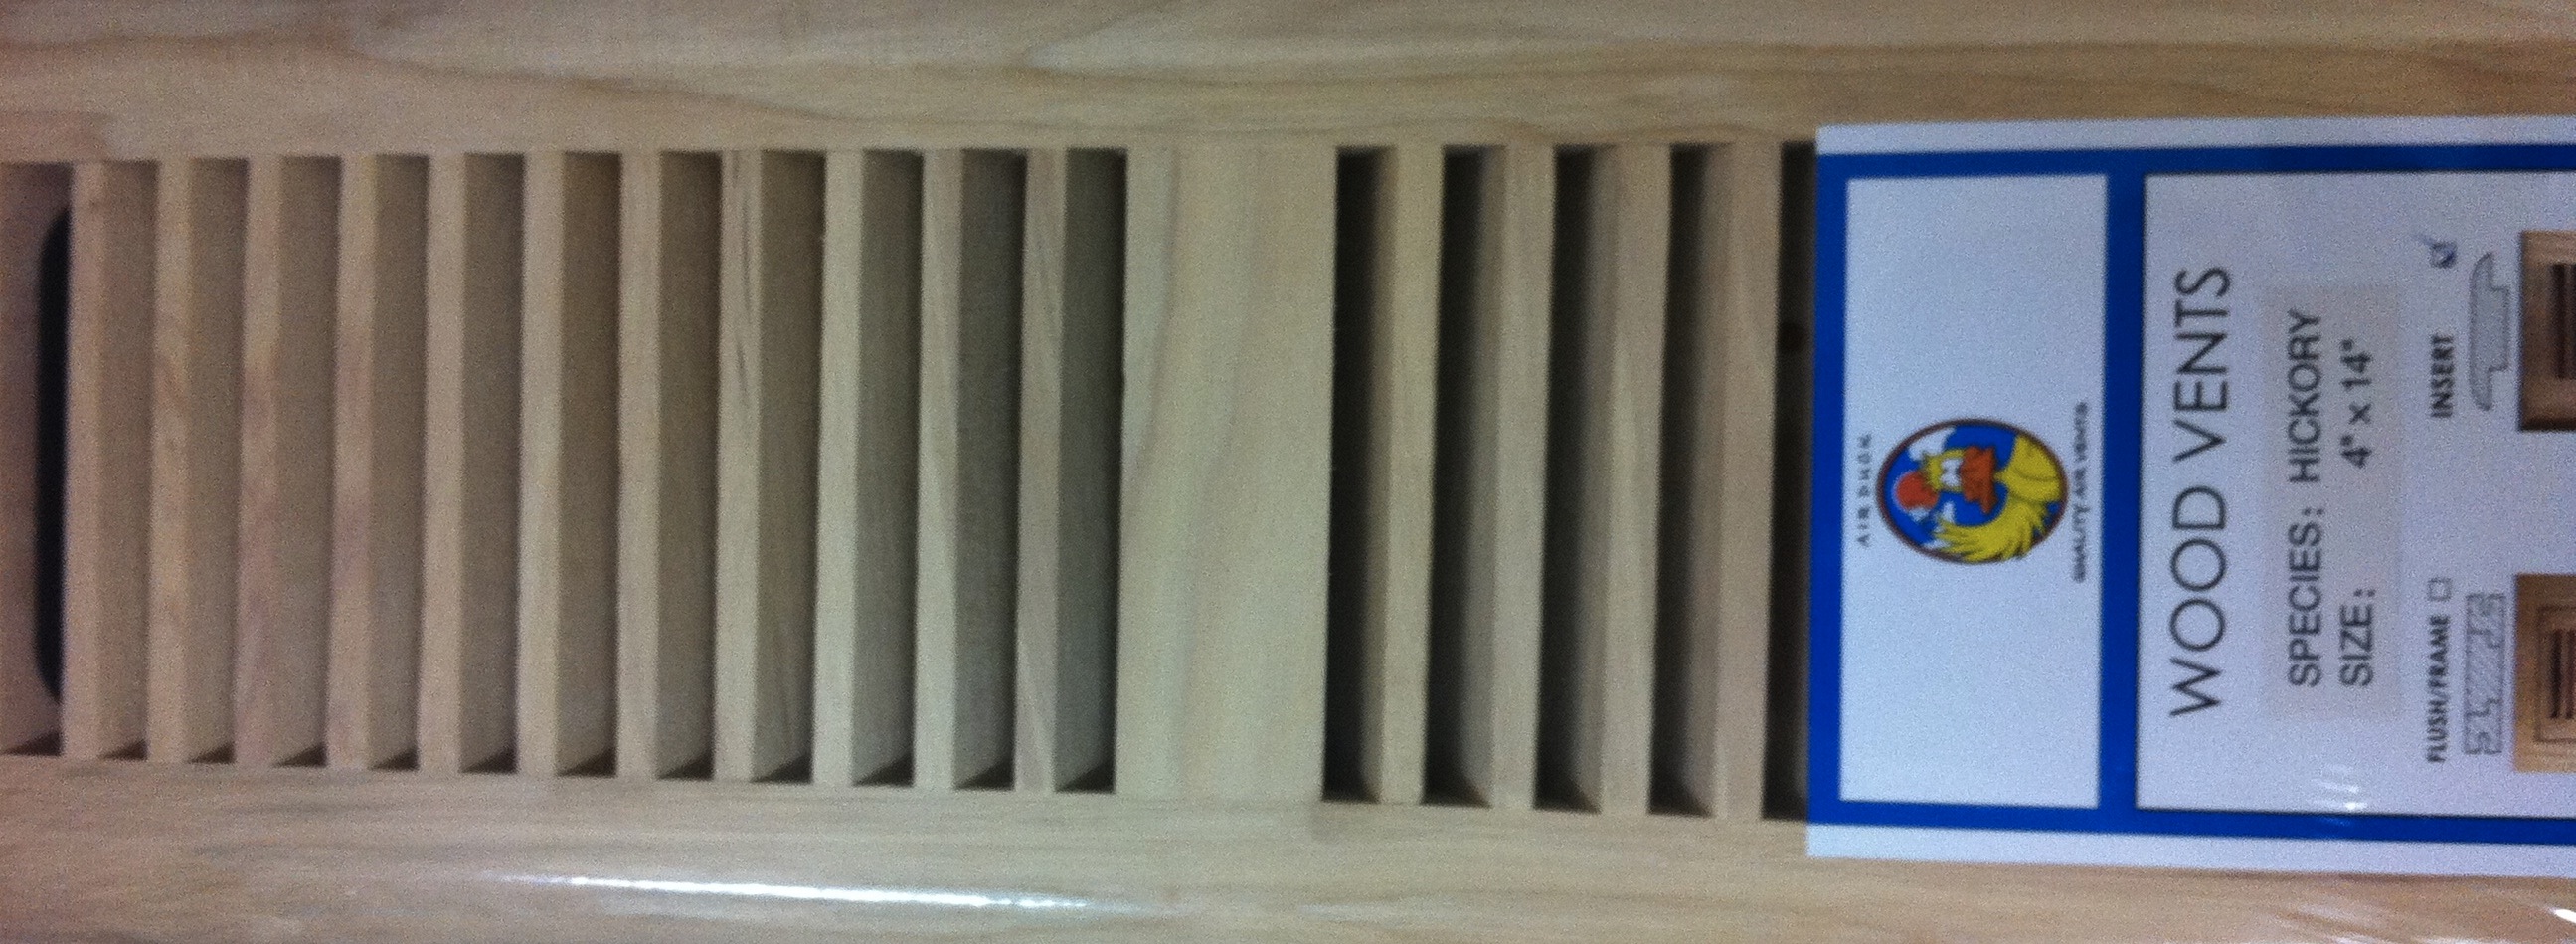 Wood Floor Registers Vent Covers Hickory Pecan